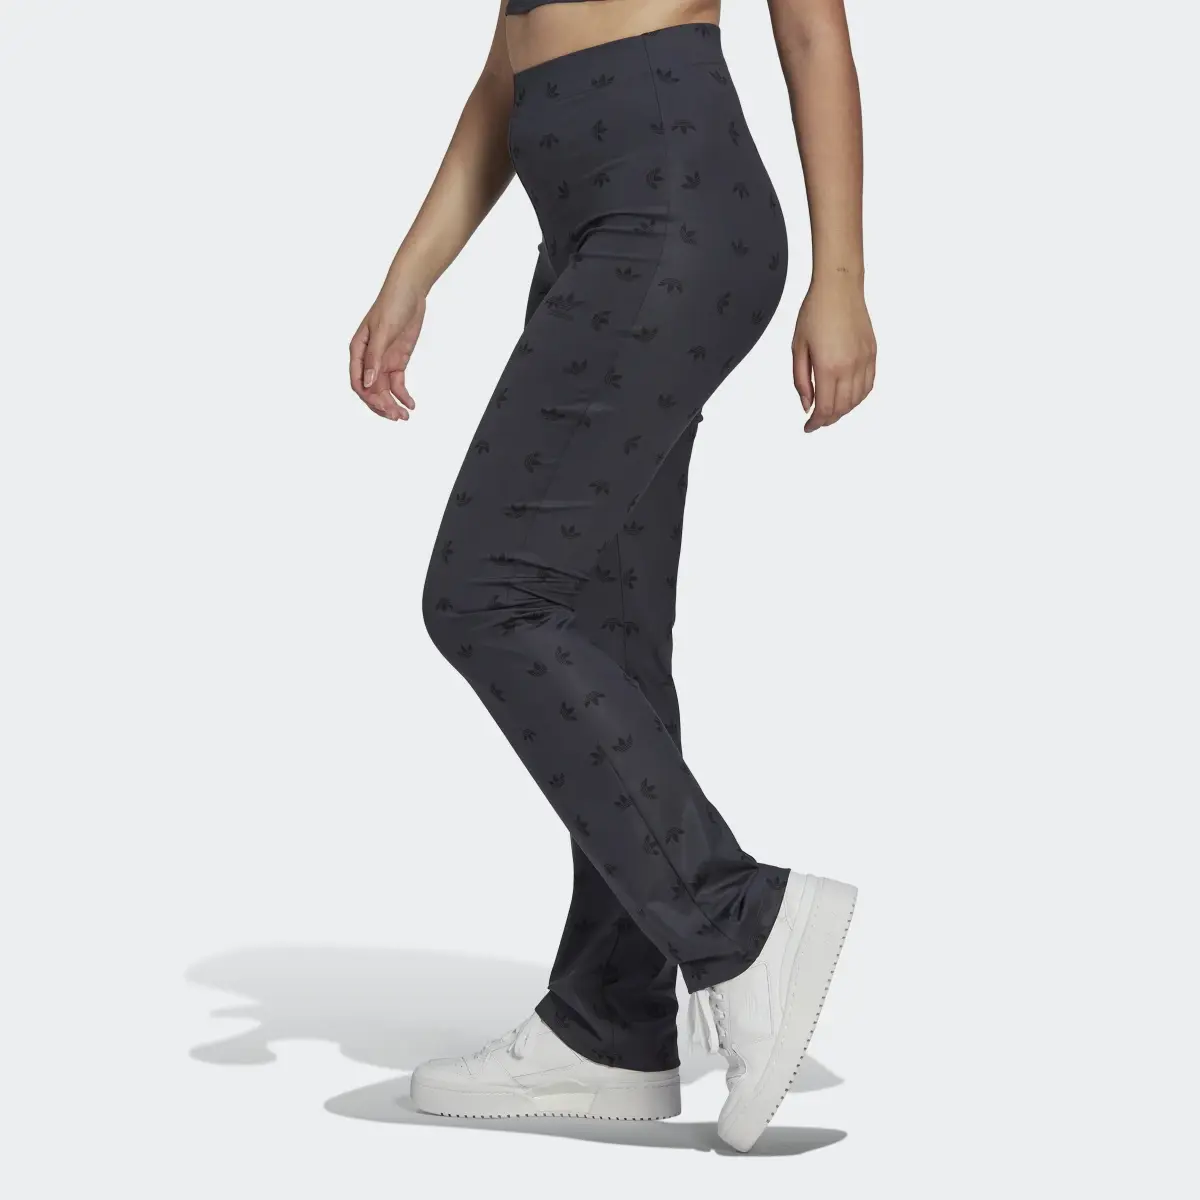 Adidas Stretchy Allover Print Pants. 2